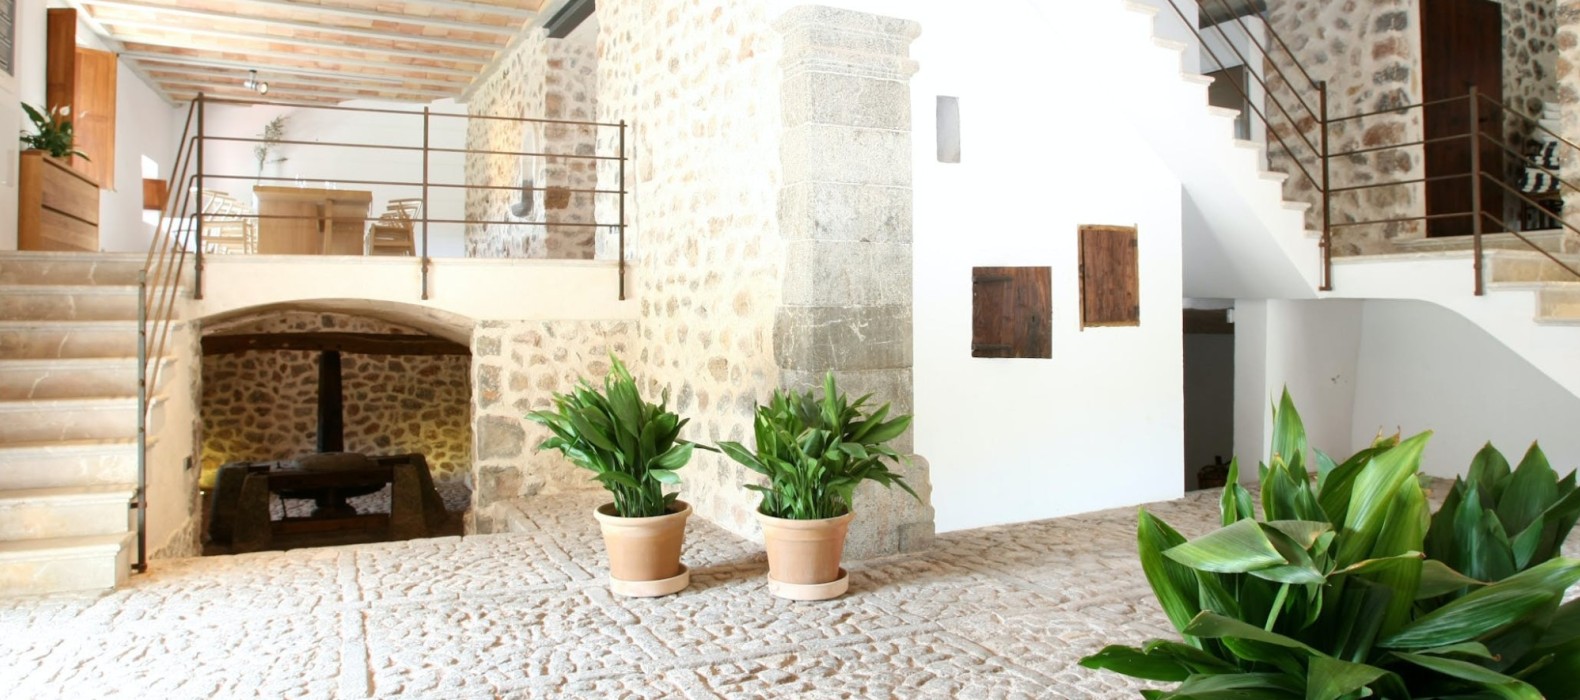 Entrance of Casa de la Palma in Mallorca